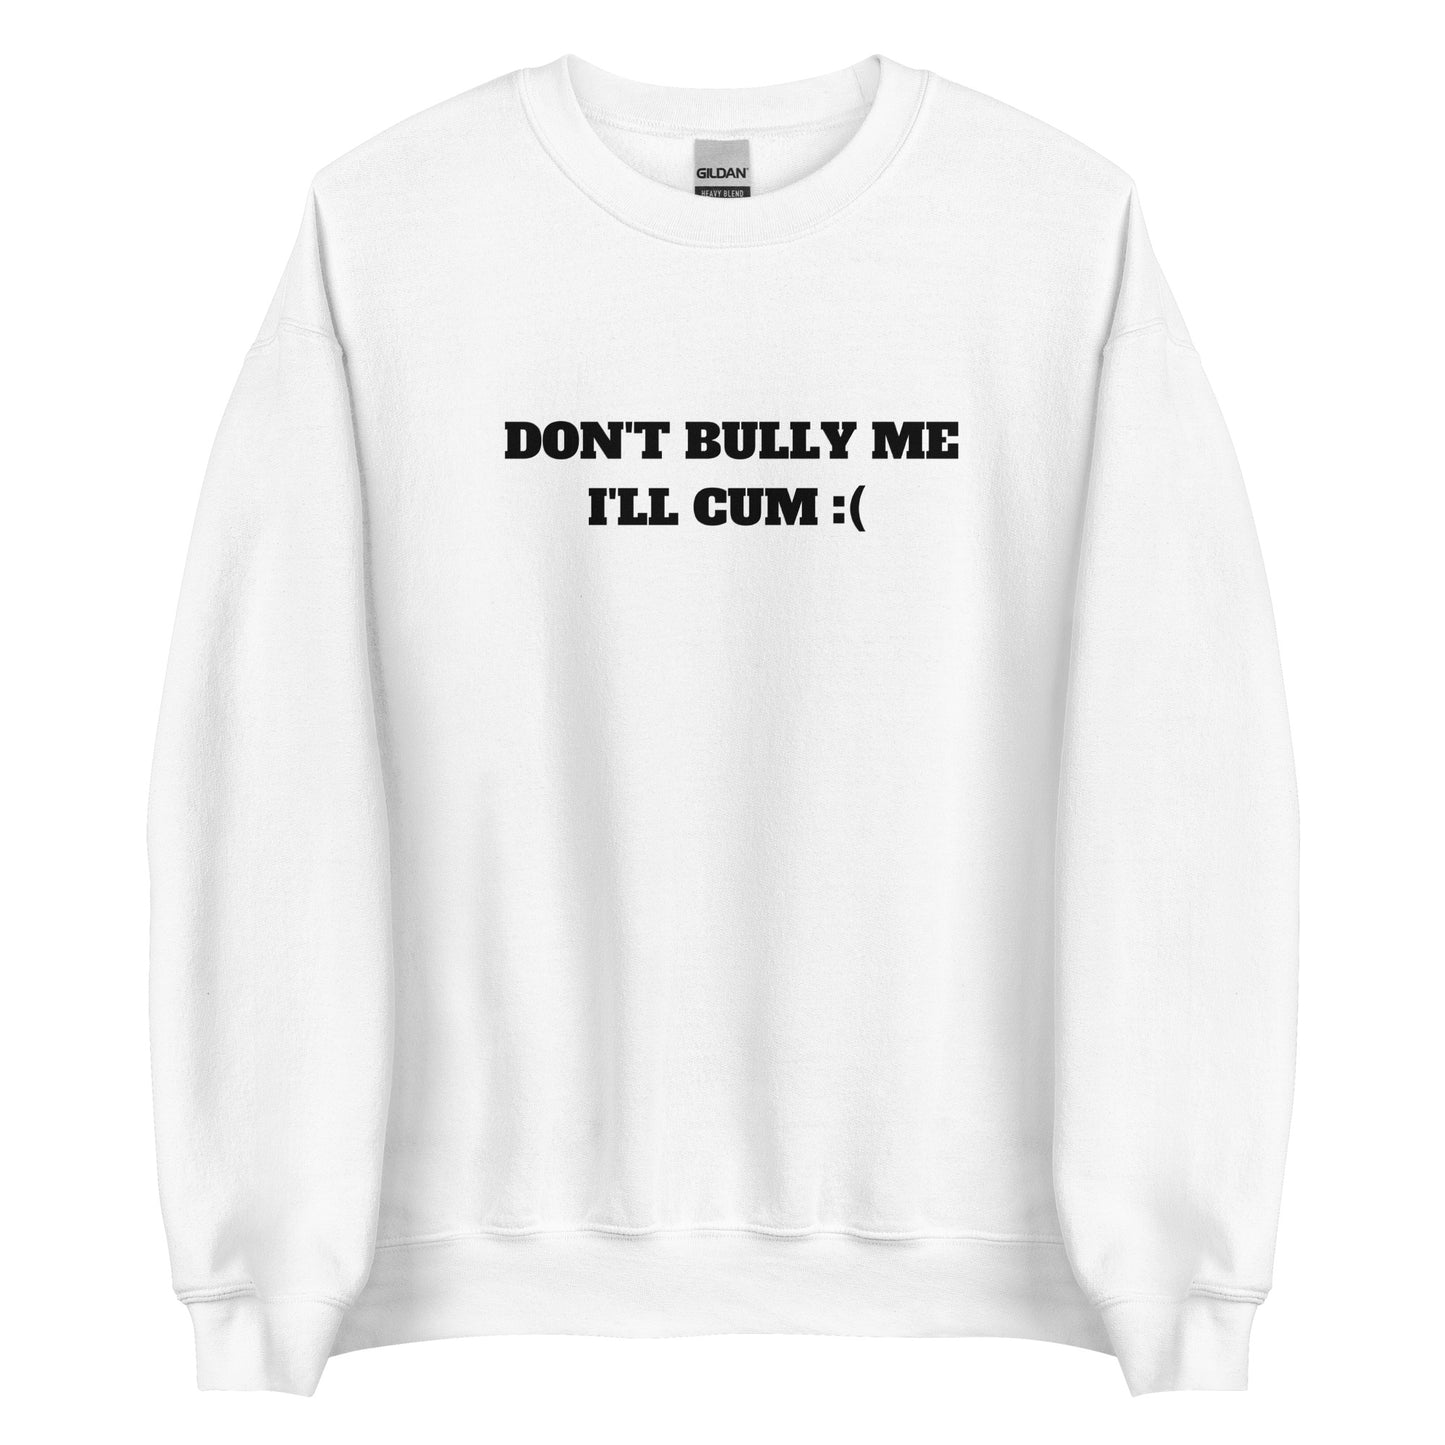 Don't Bully Me Sweatshirt